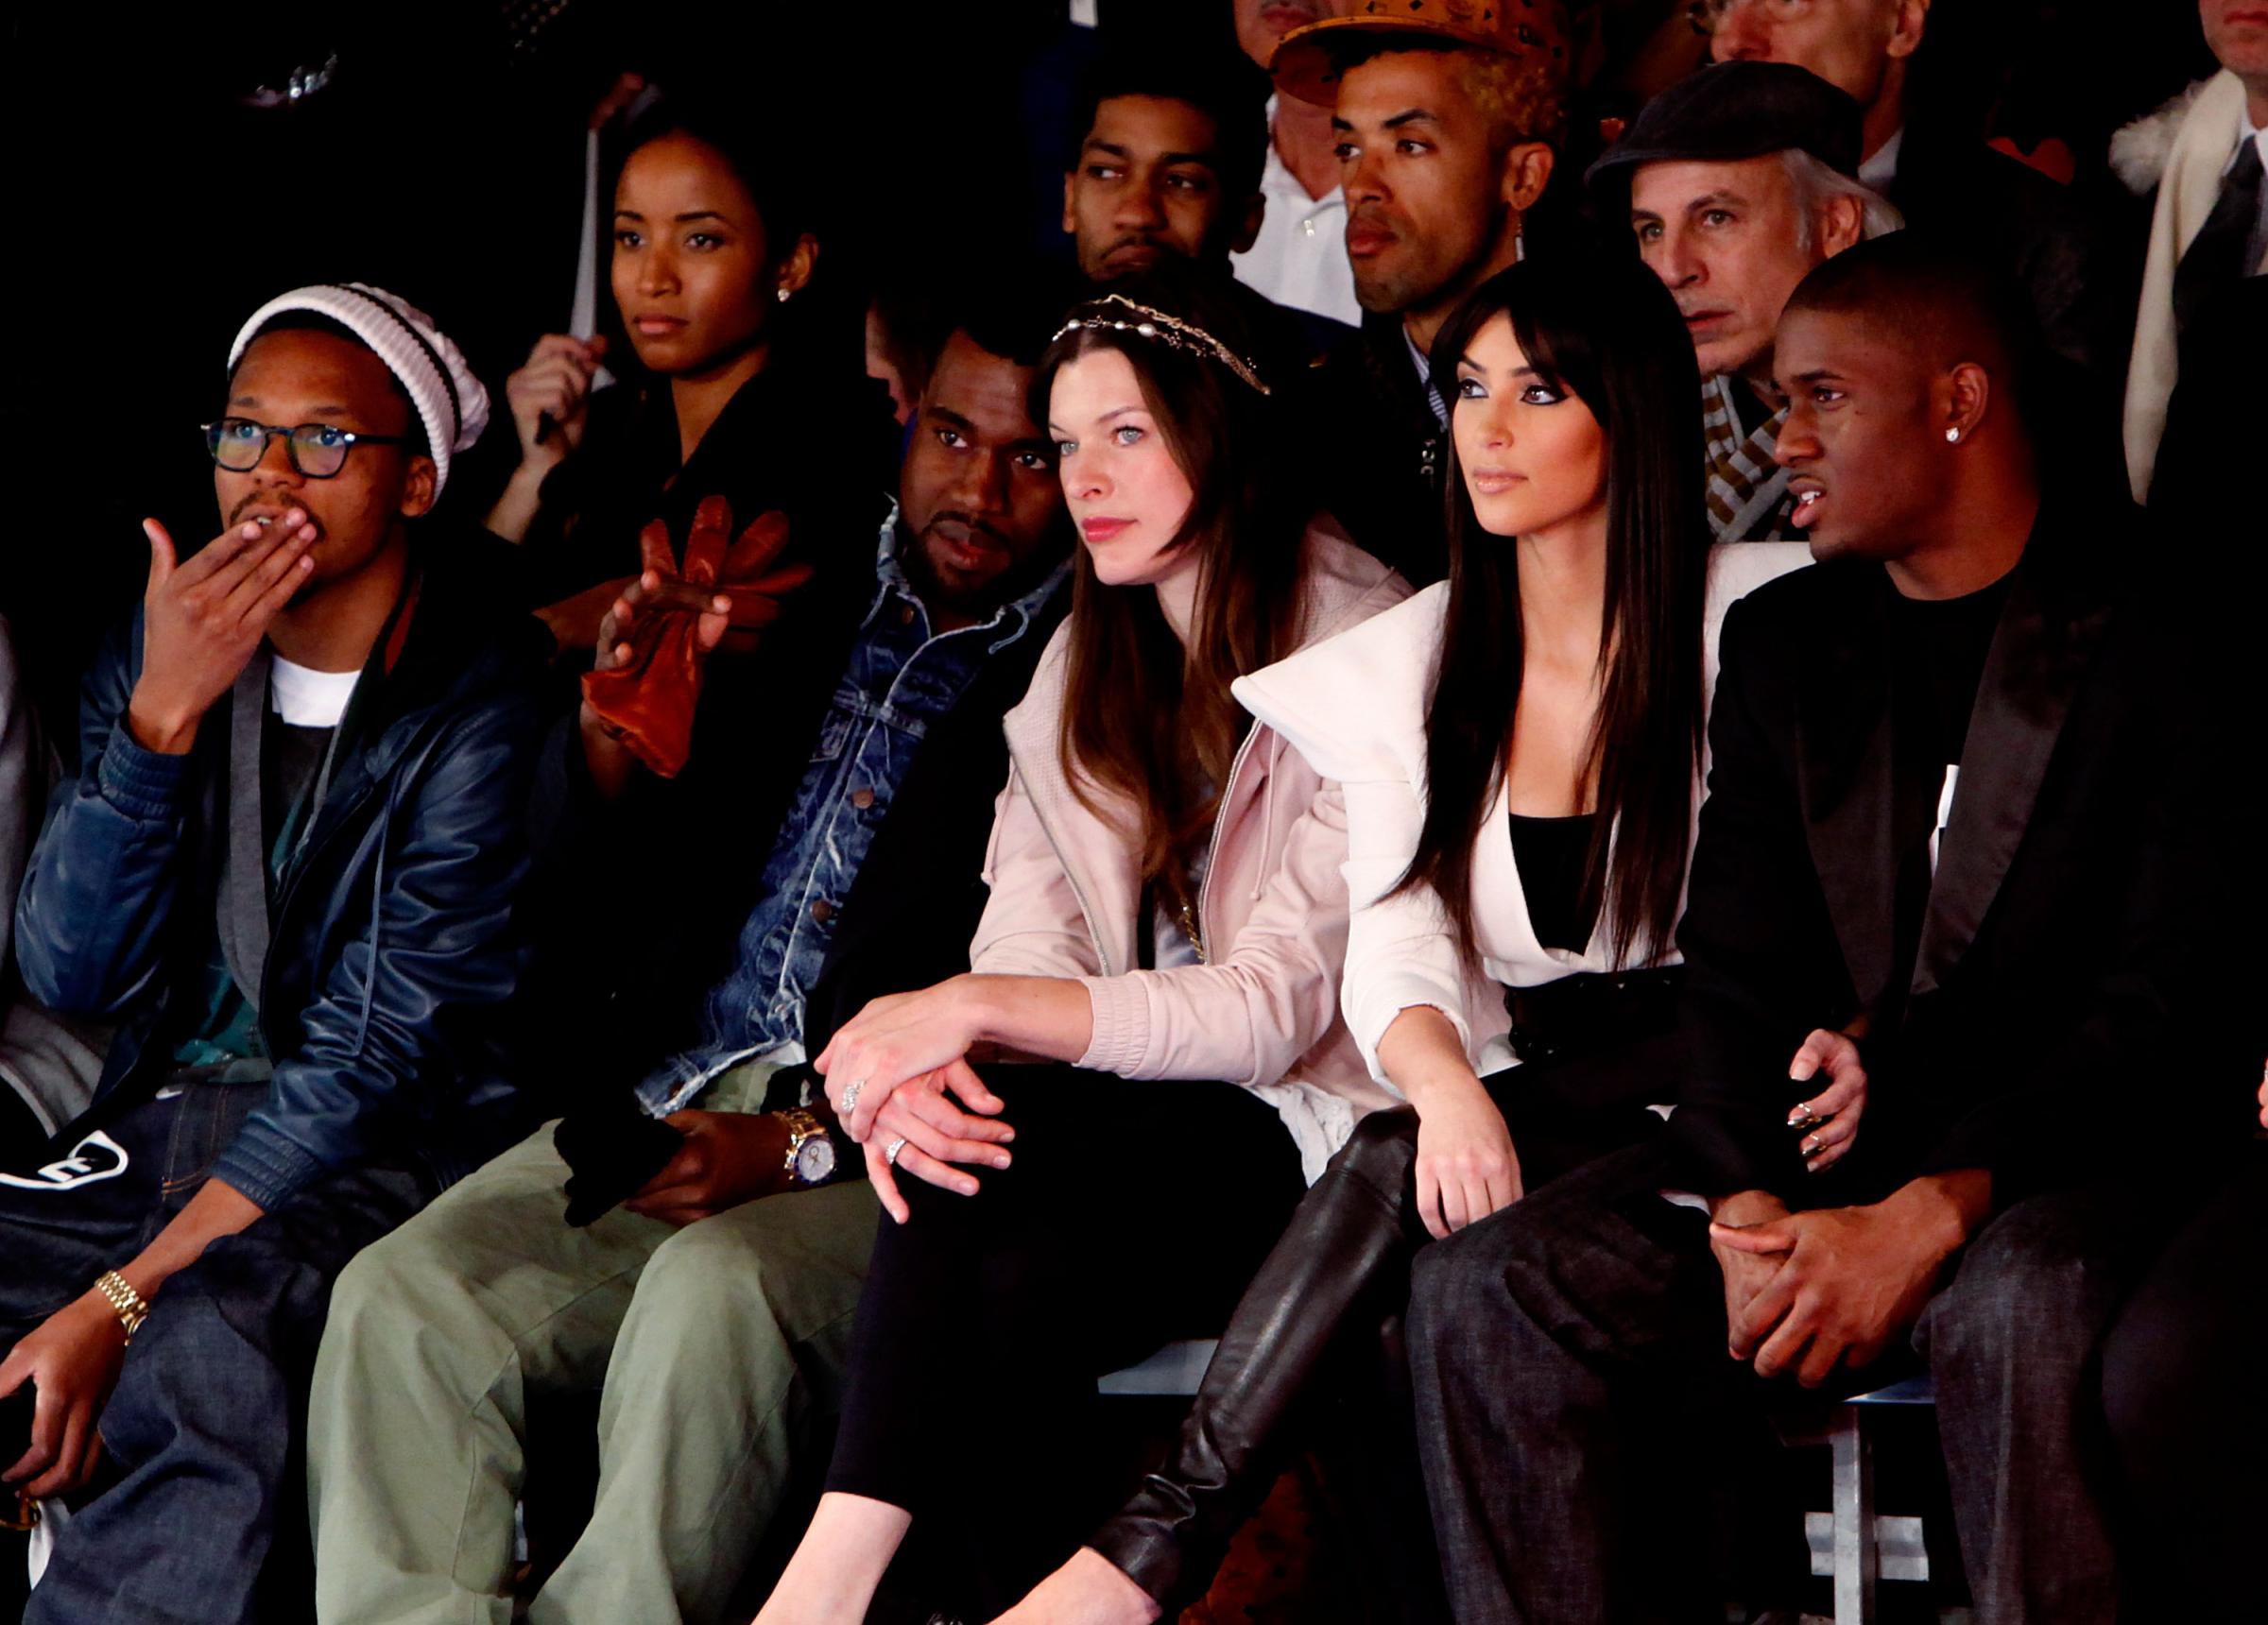 Lupe Fiasco, Kanye West, Milla Jovovich, Kim Kardashian and Reggie Bush at the Y-3 Fall/Winter 2009 fashion show. (Photo by Joe Kohen/WireImage)